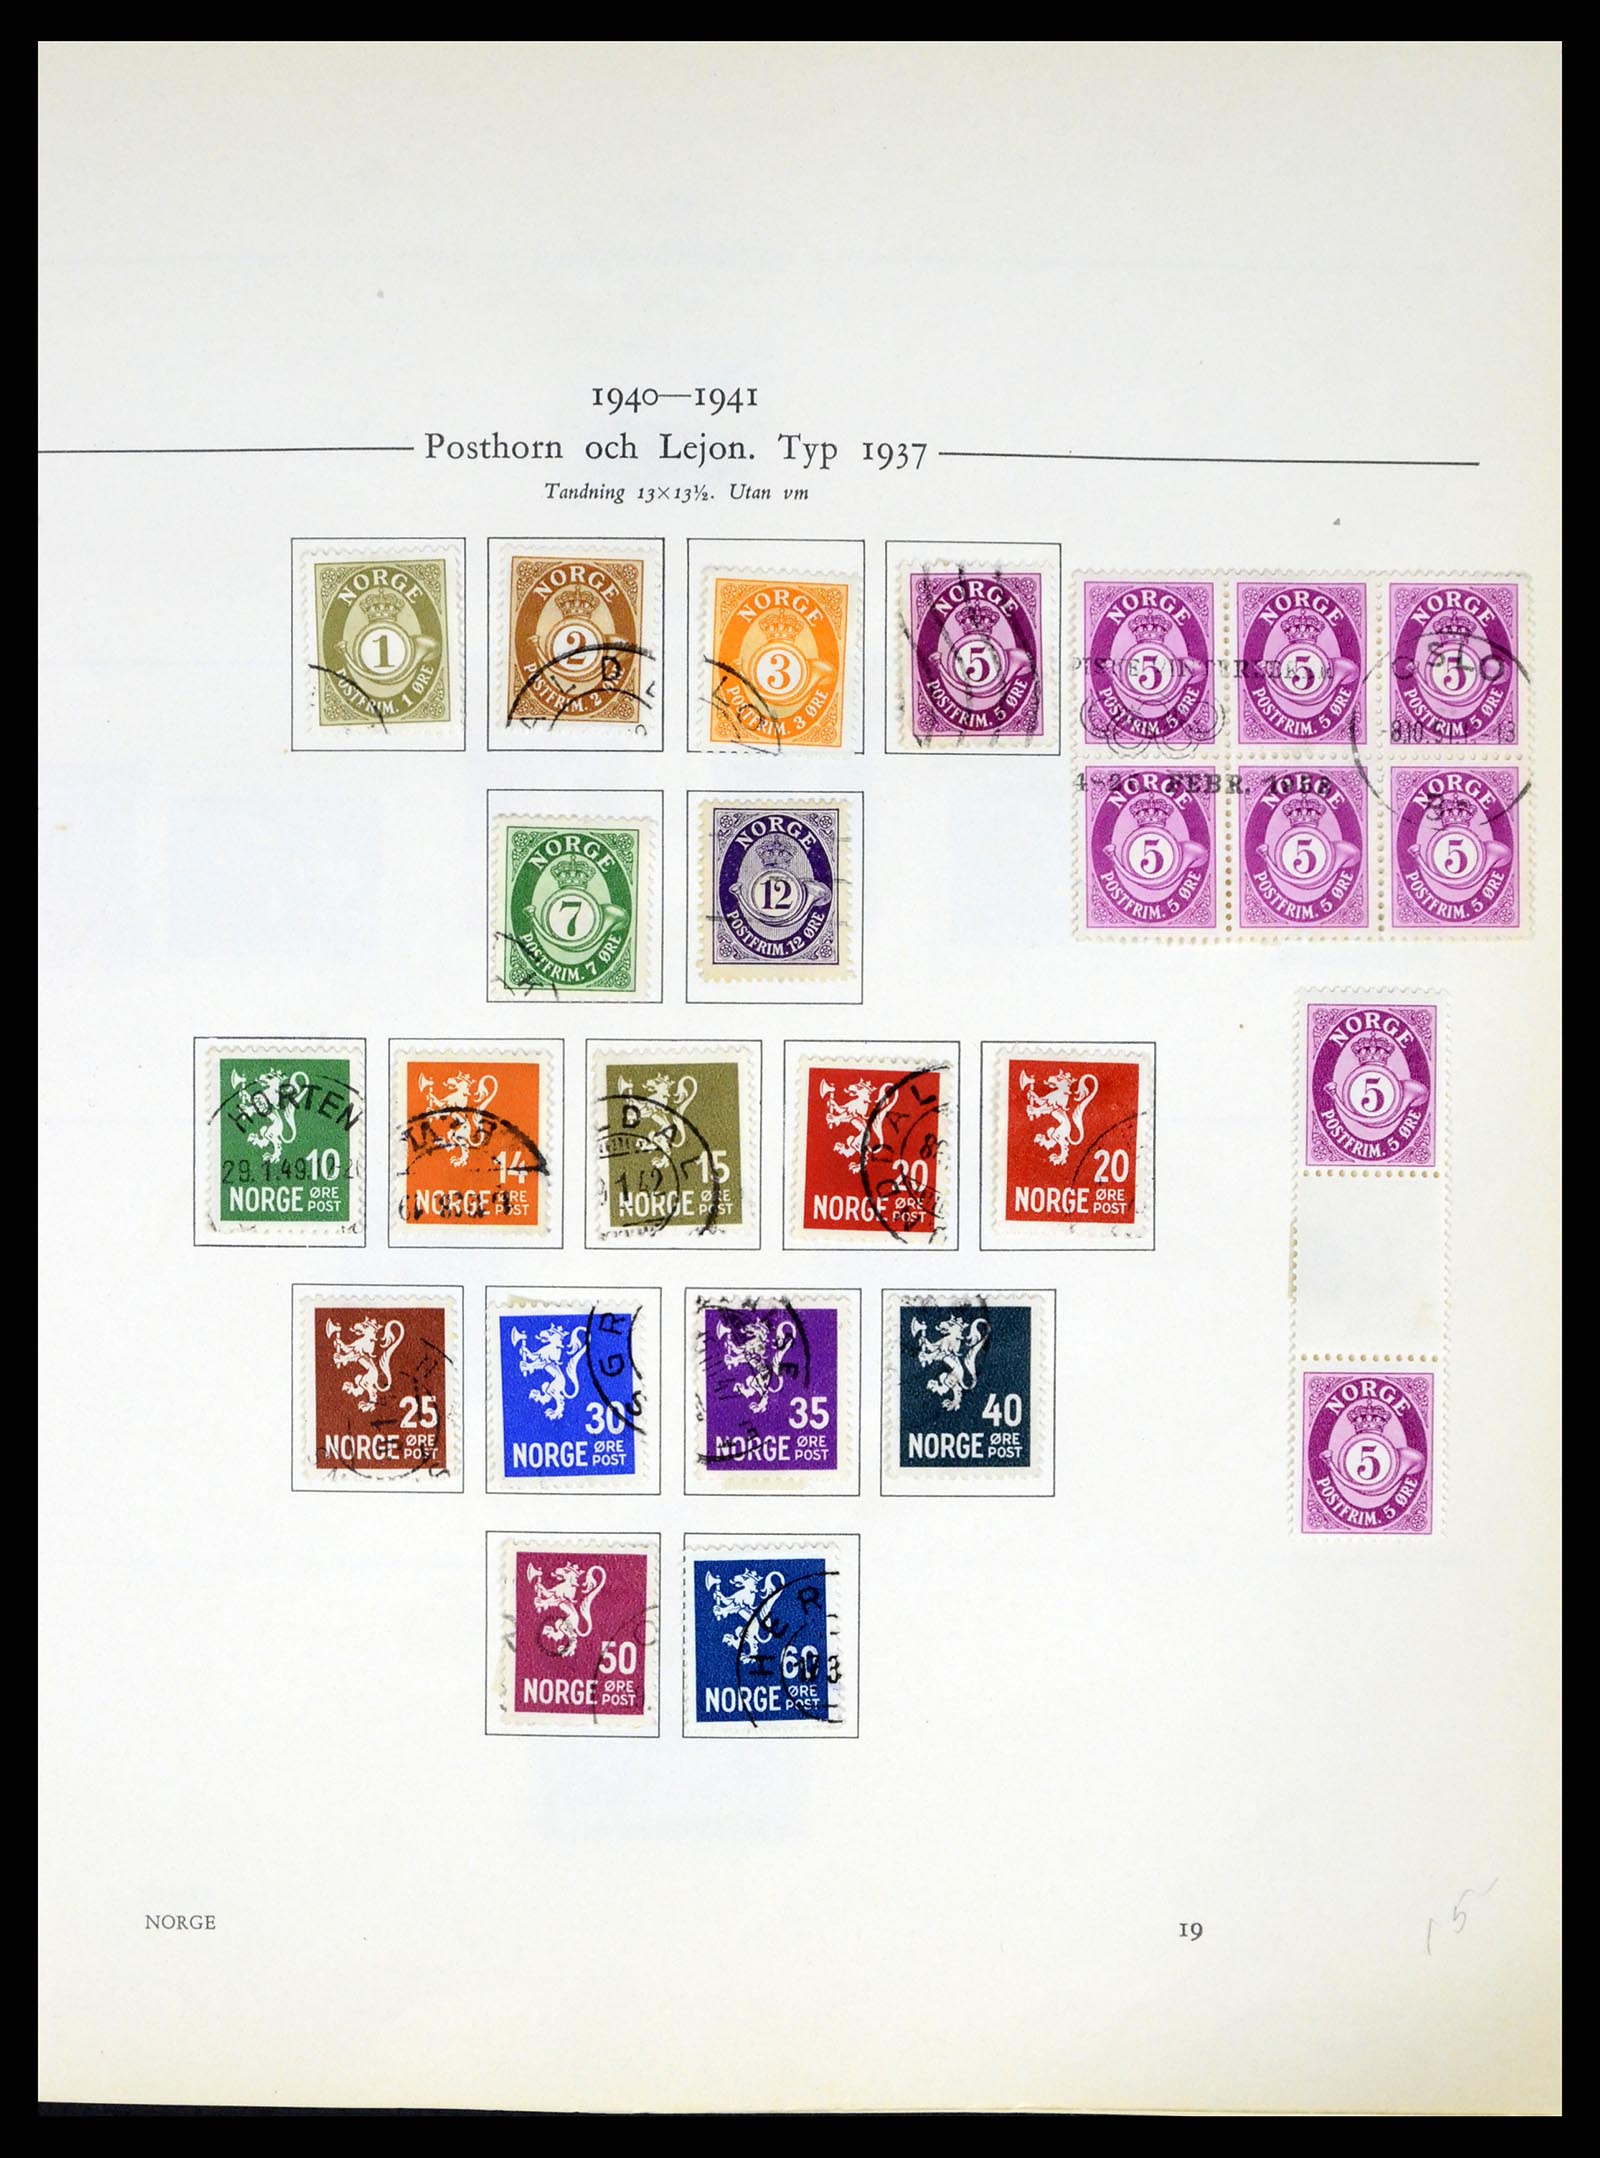 37387 019 - Stamp collection 37387 Scandinavia 1851-1960.